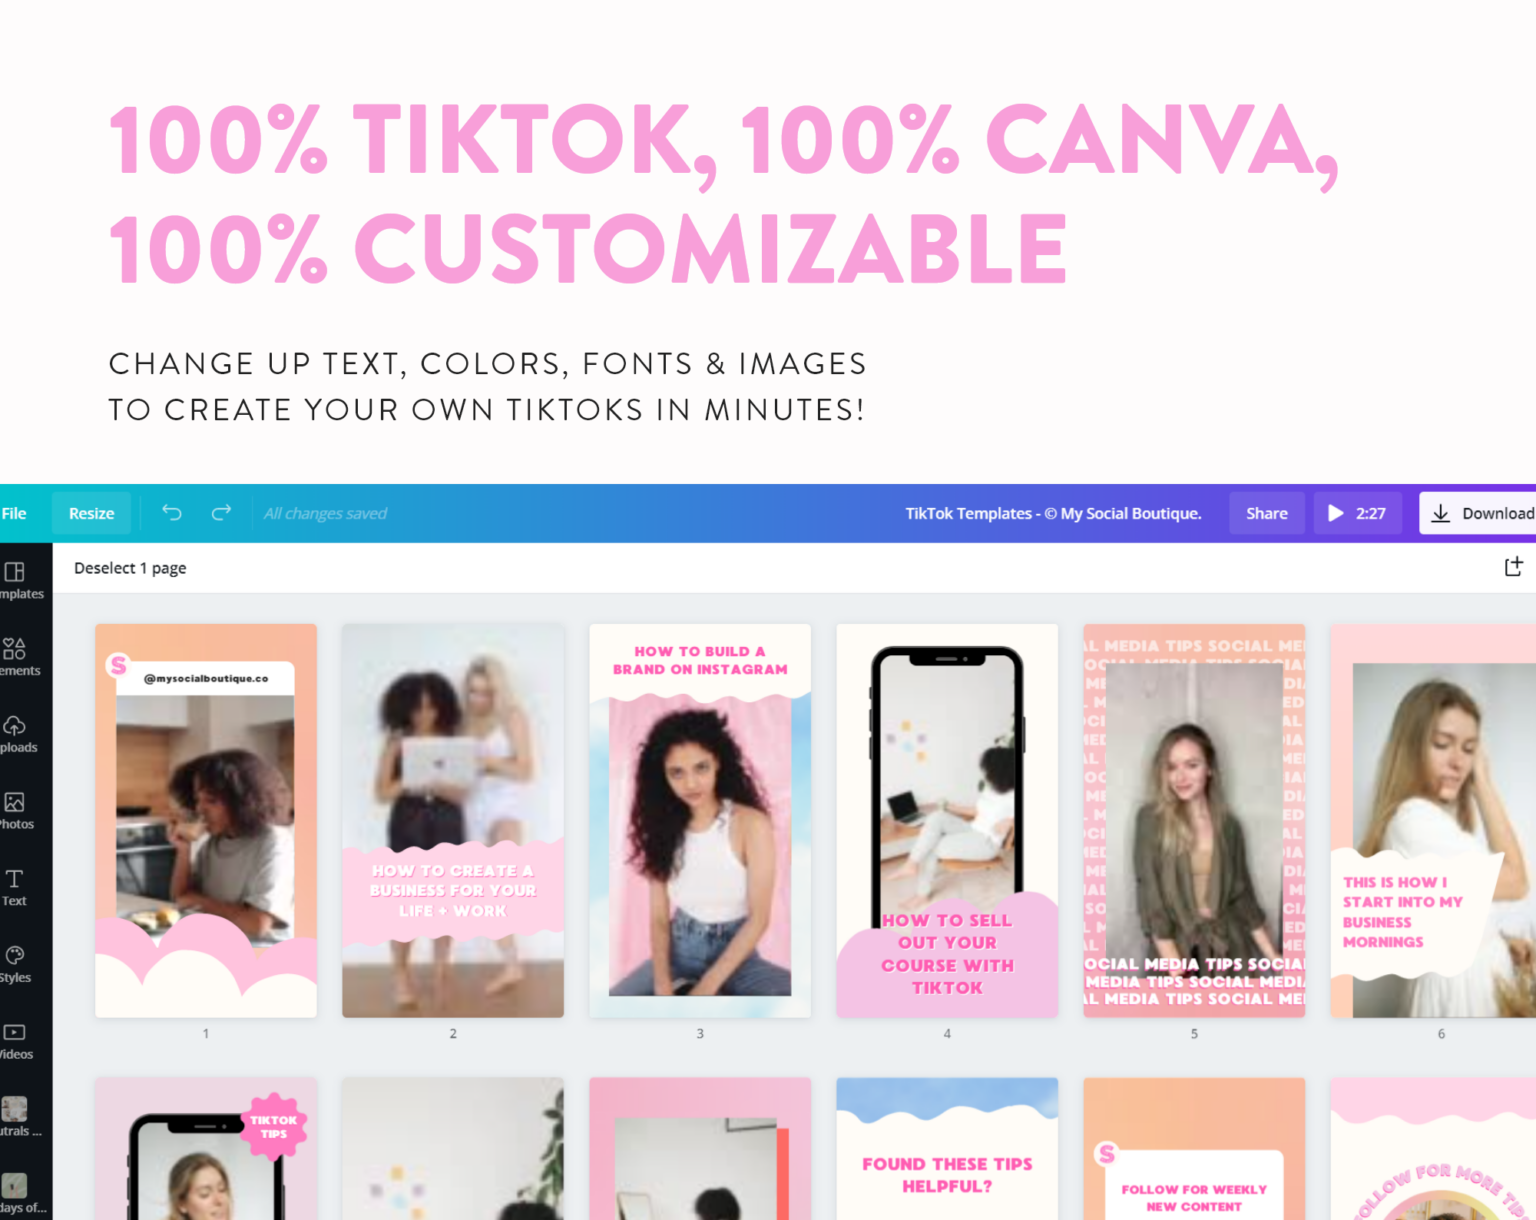 tiktok-marketing-templates-for-canva-customizable-8